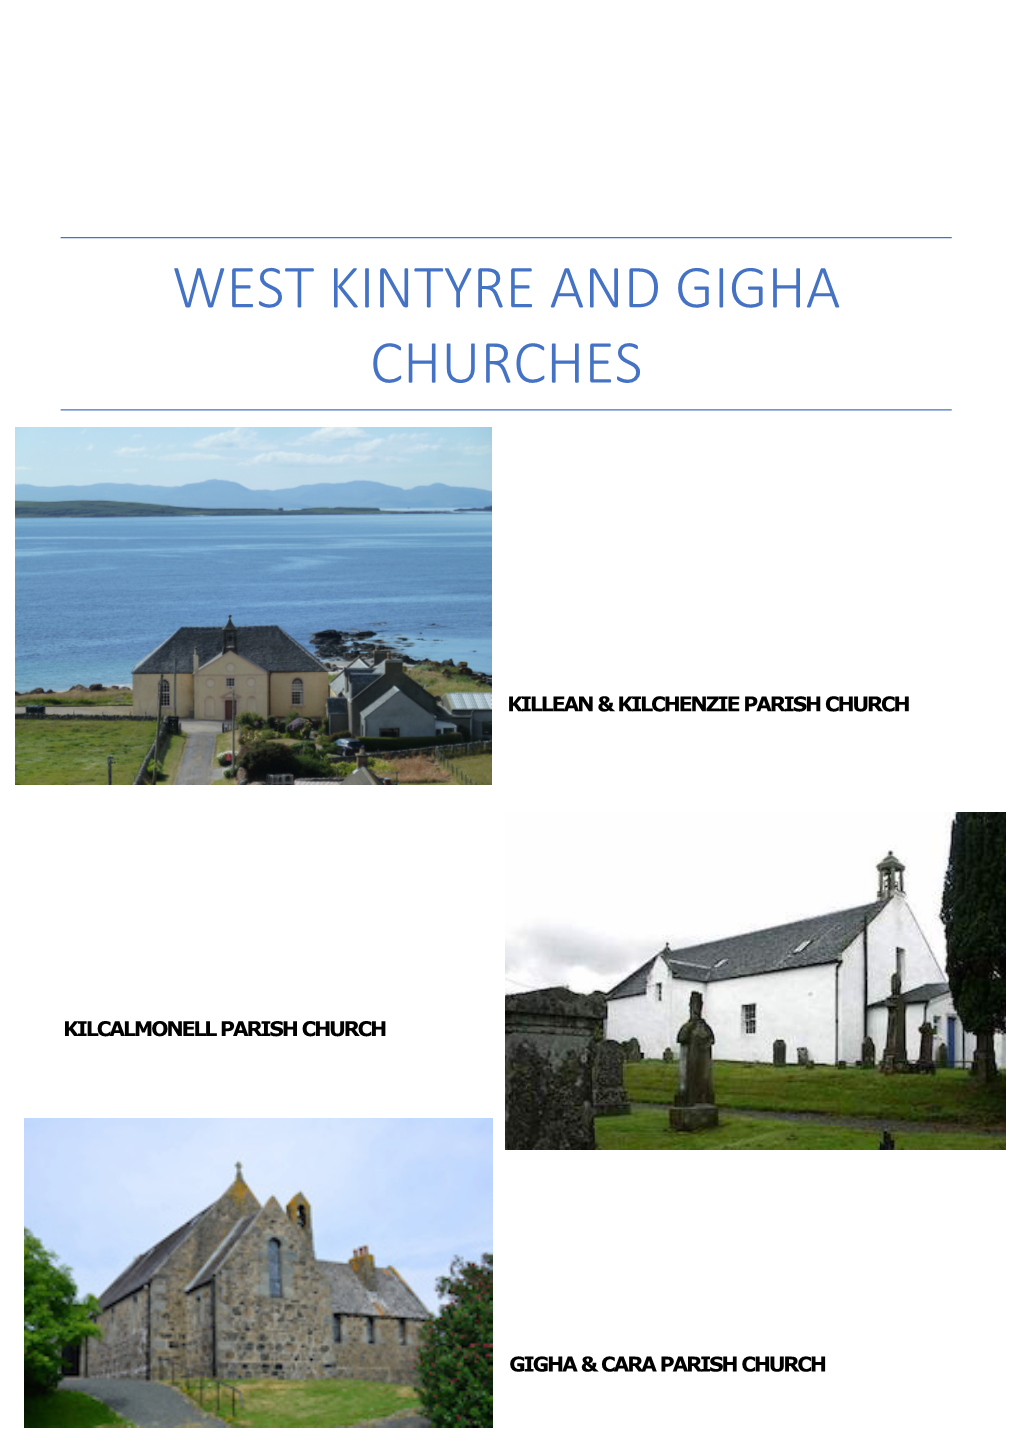 West Kintyre and Gigha Churches